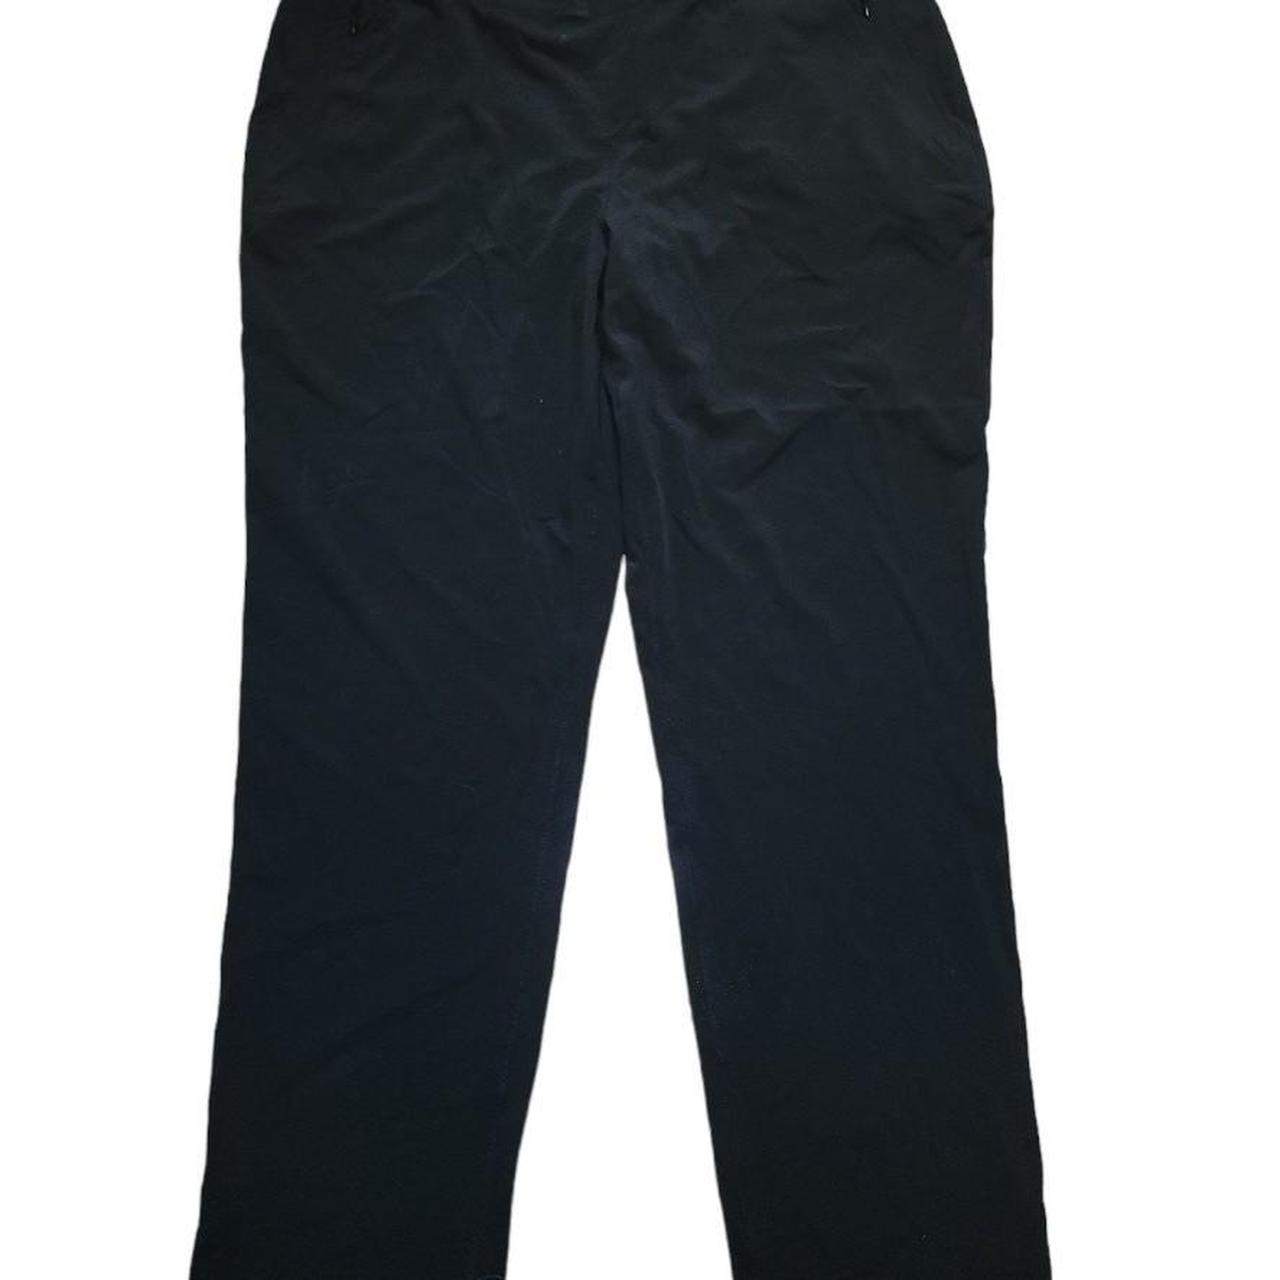 Zenergy Chico's UPF black pants side leg zip - Depop